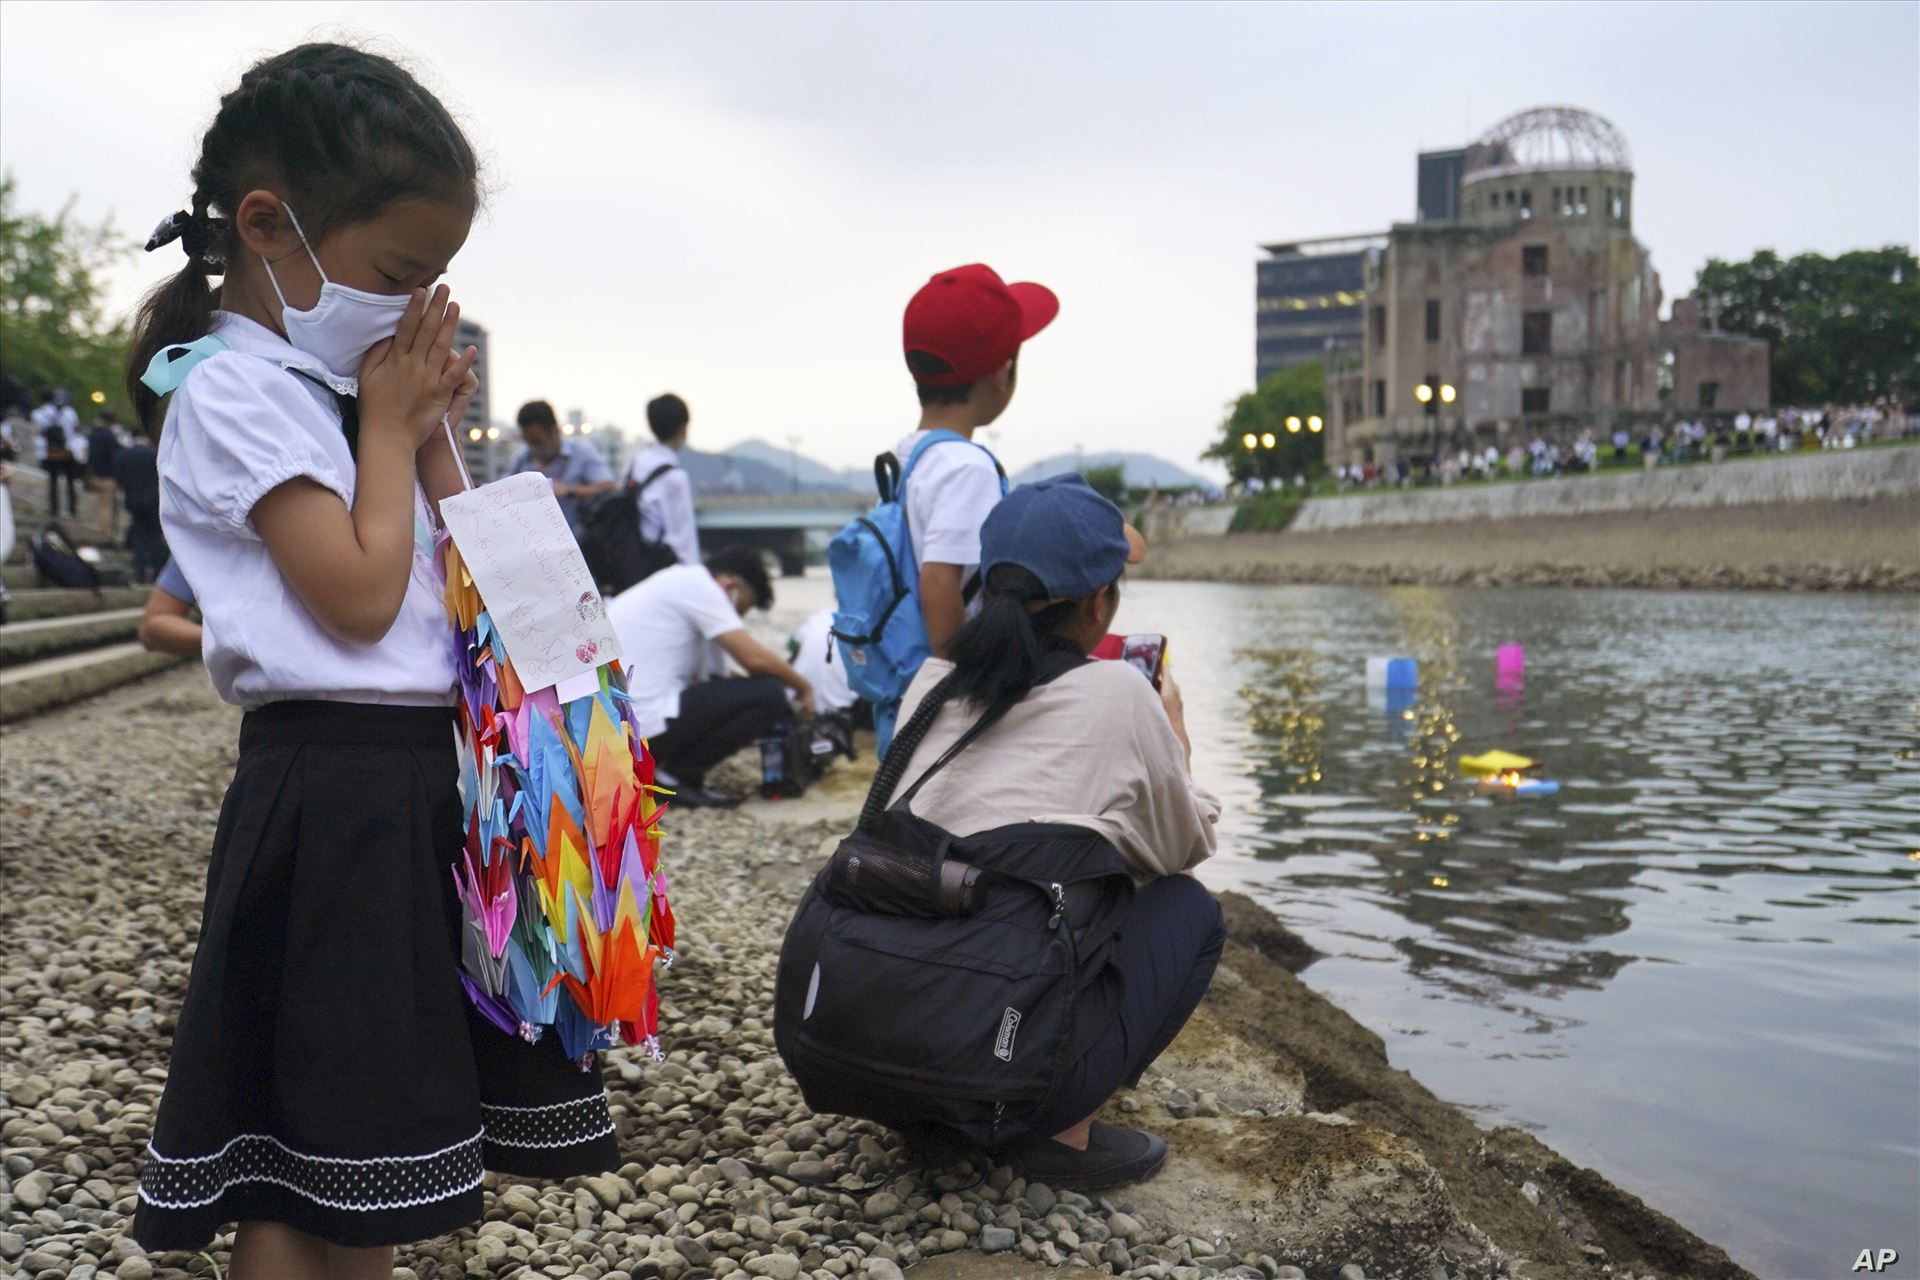 APTOPIX Japan Hiroshima Anniversary - گروهی از ژاپنی ها در هفتاد و پنجمین سالگرد بمباران اتمی هیروشیما که به پایان جنگ جهانی دوم و تسلیم ژاپن منتهی شد. by mohsen dehbashi